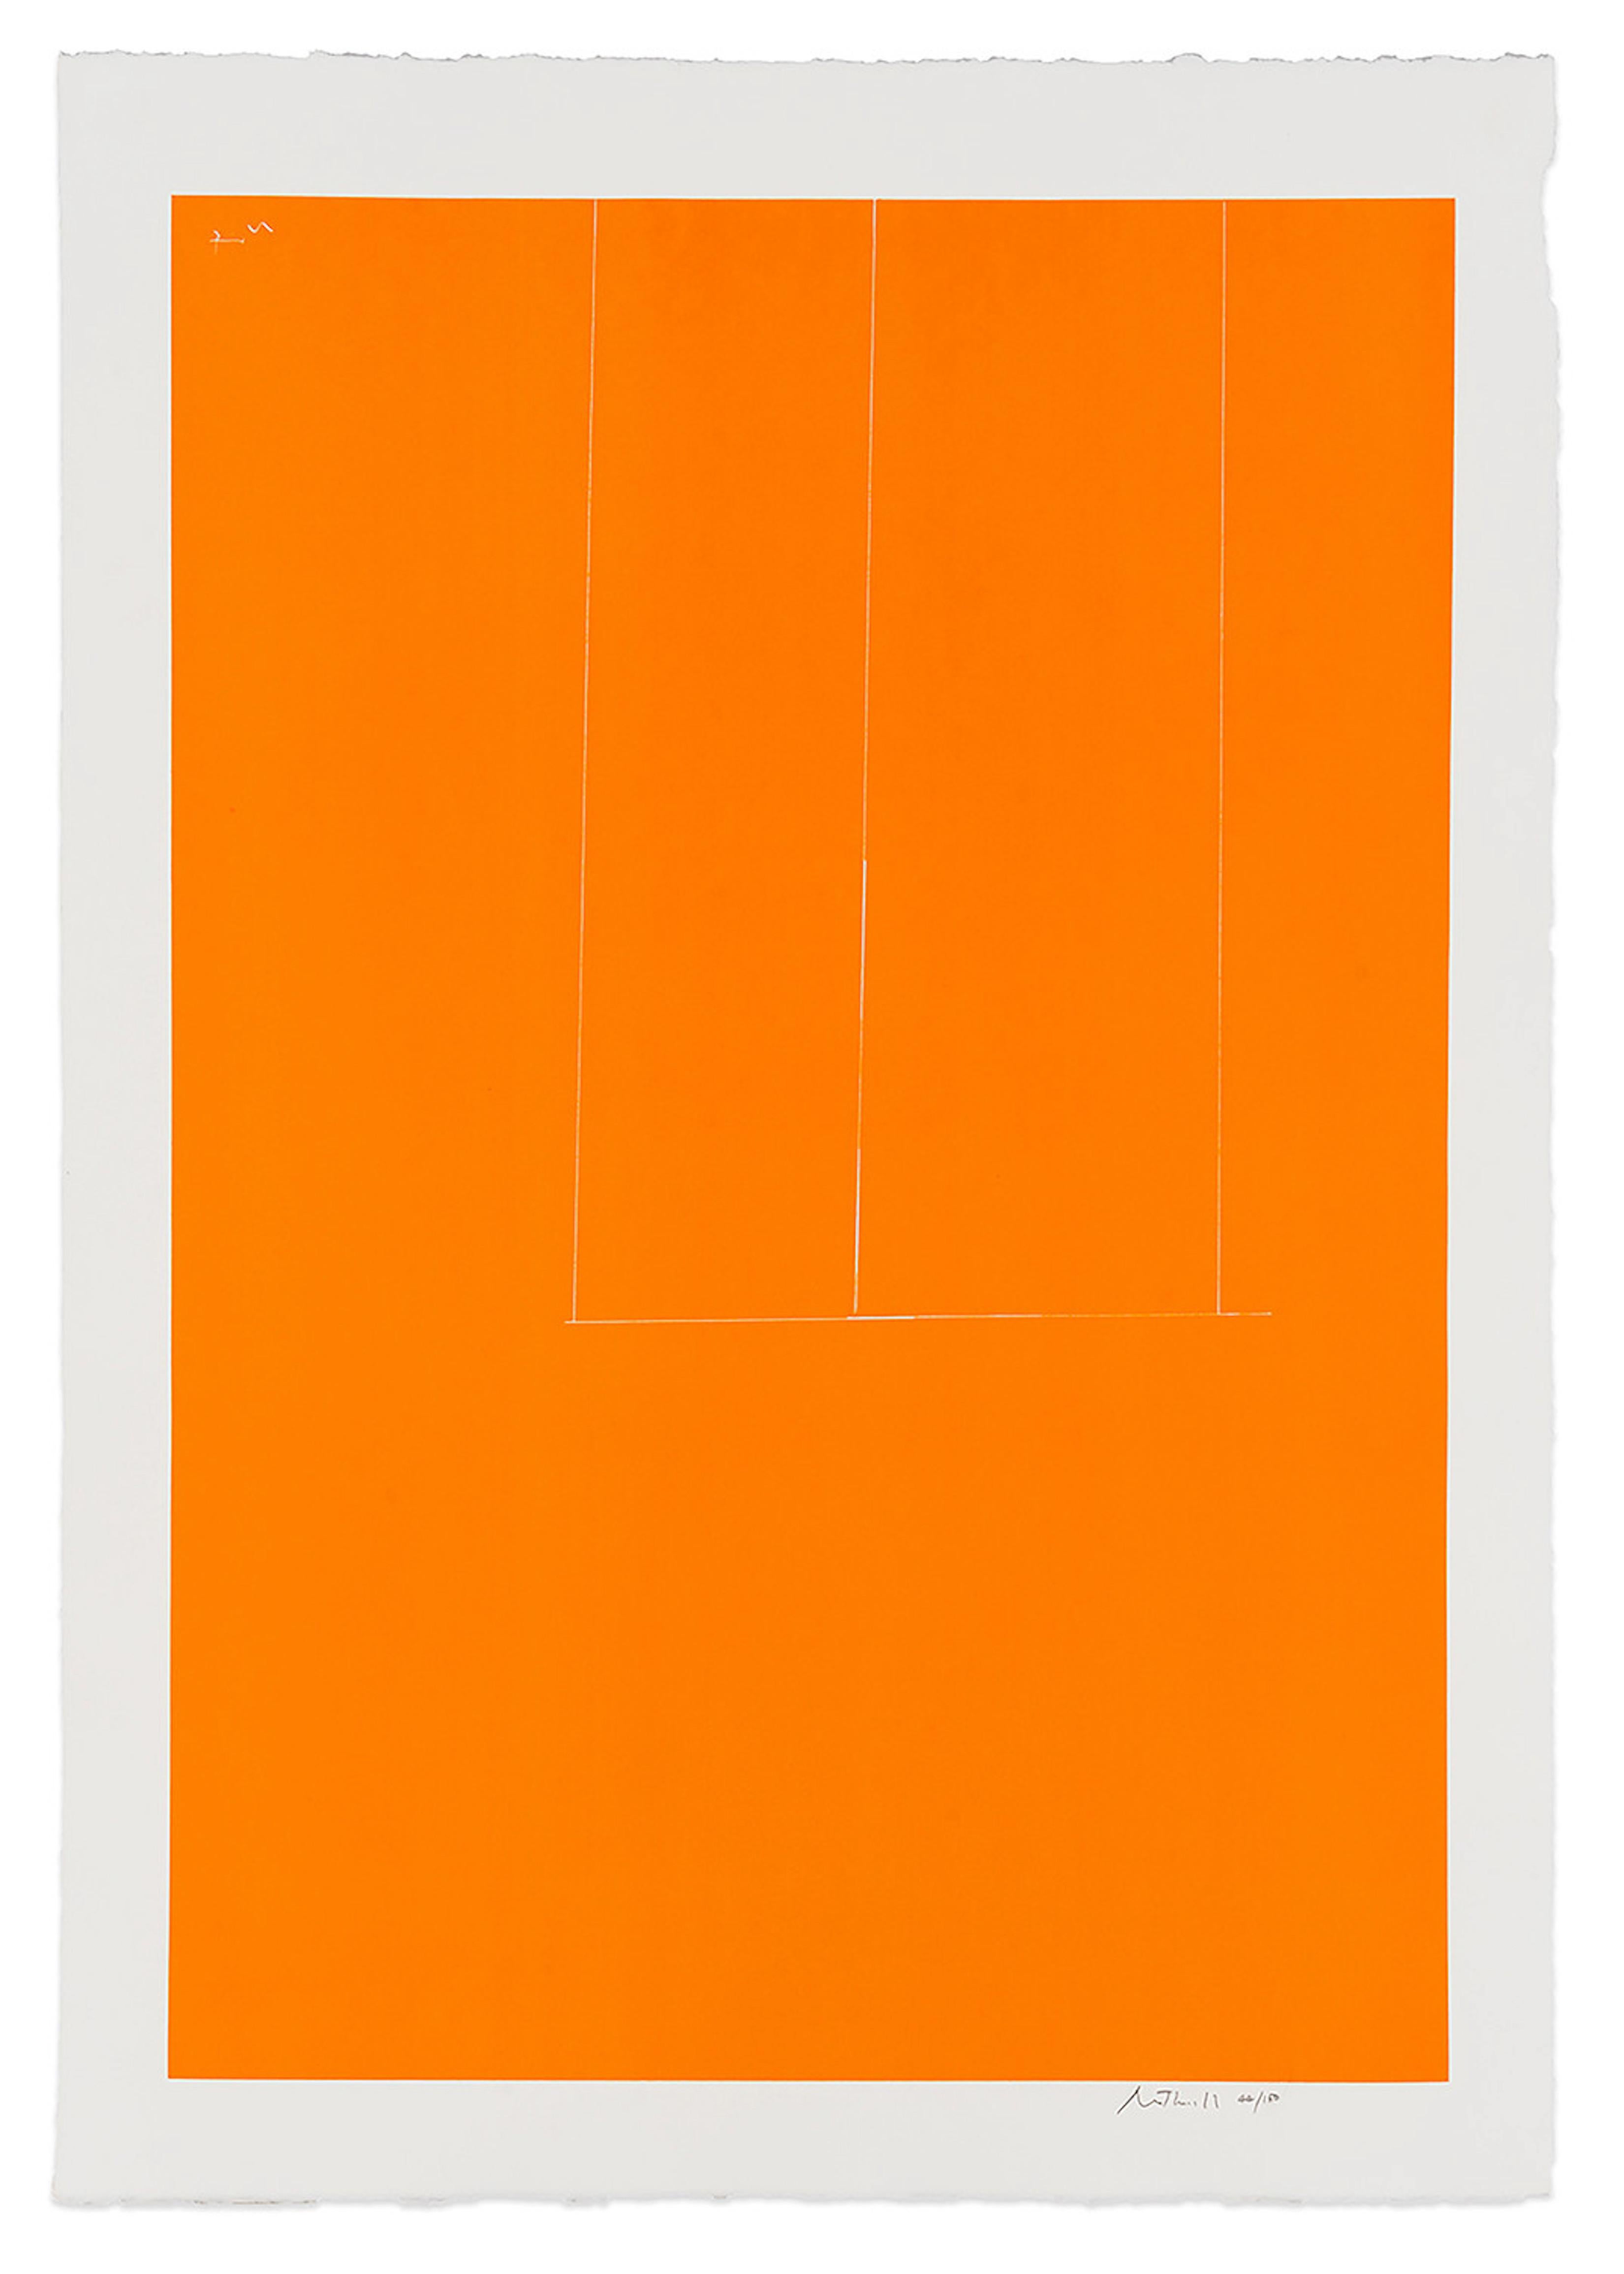 Robert Motherwell Abstract Print - London Series I: Untitled (Orange)